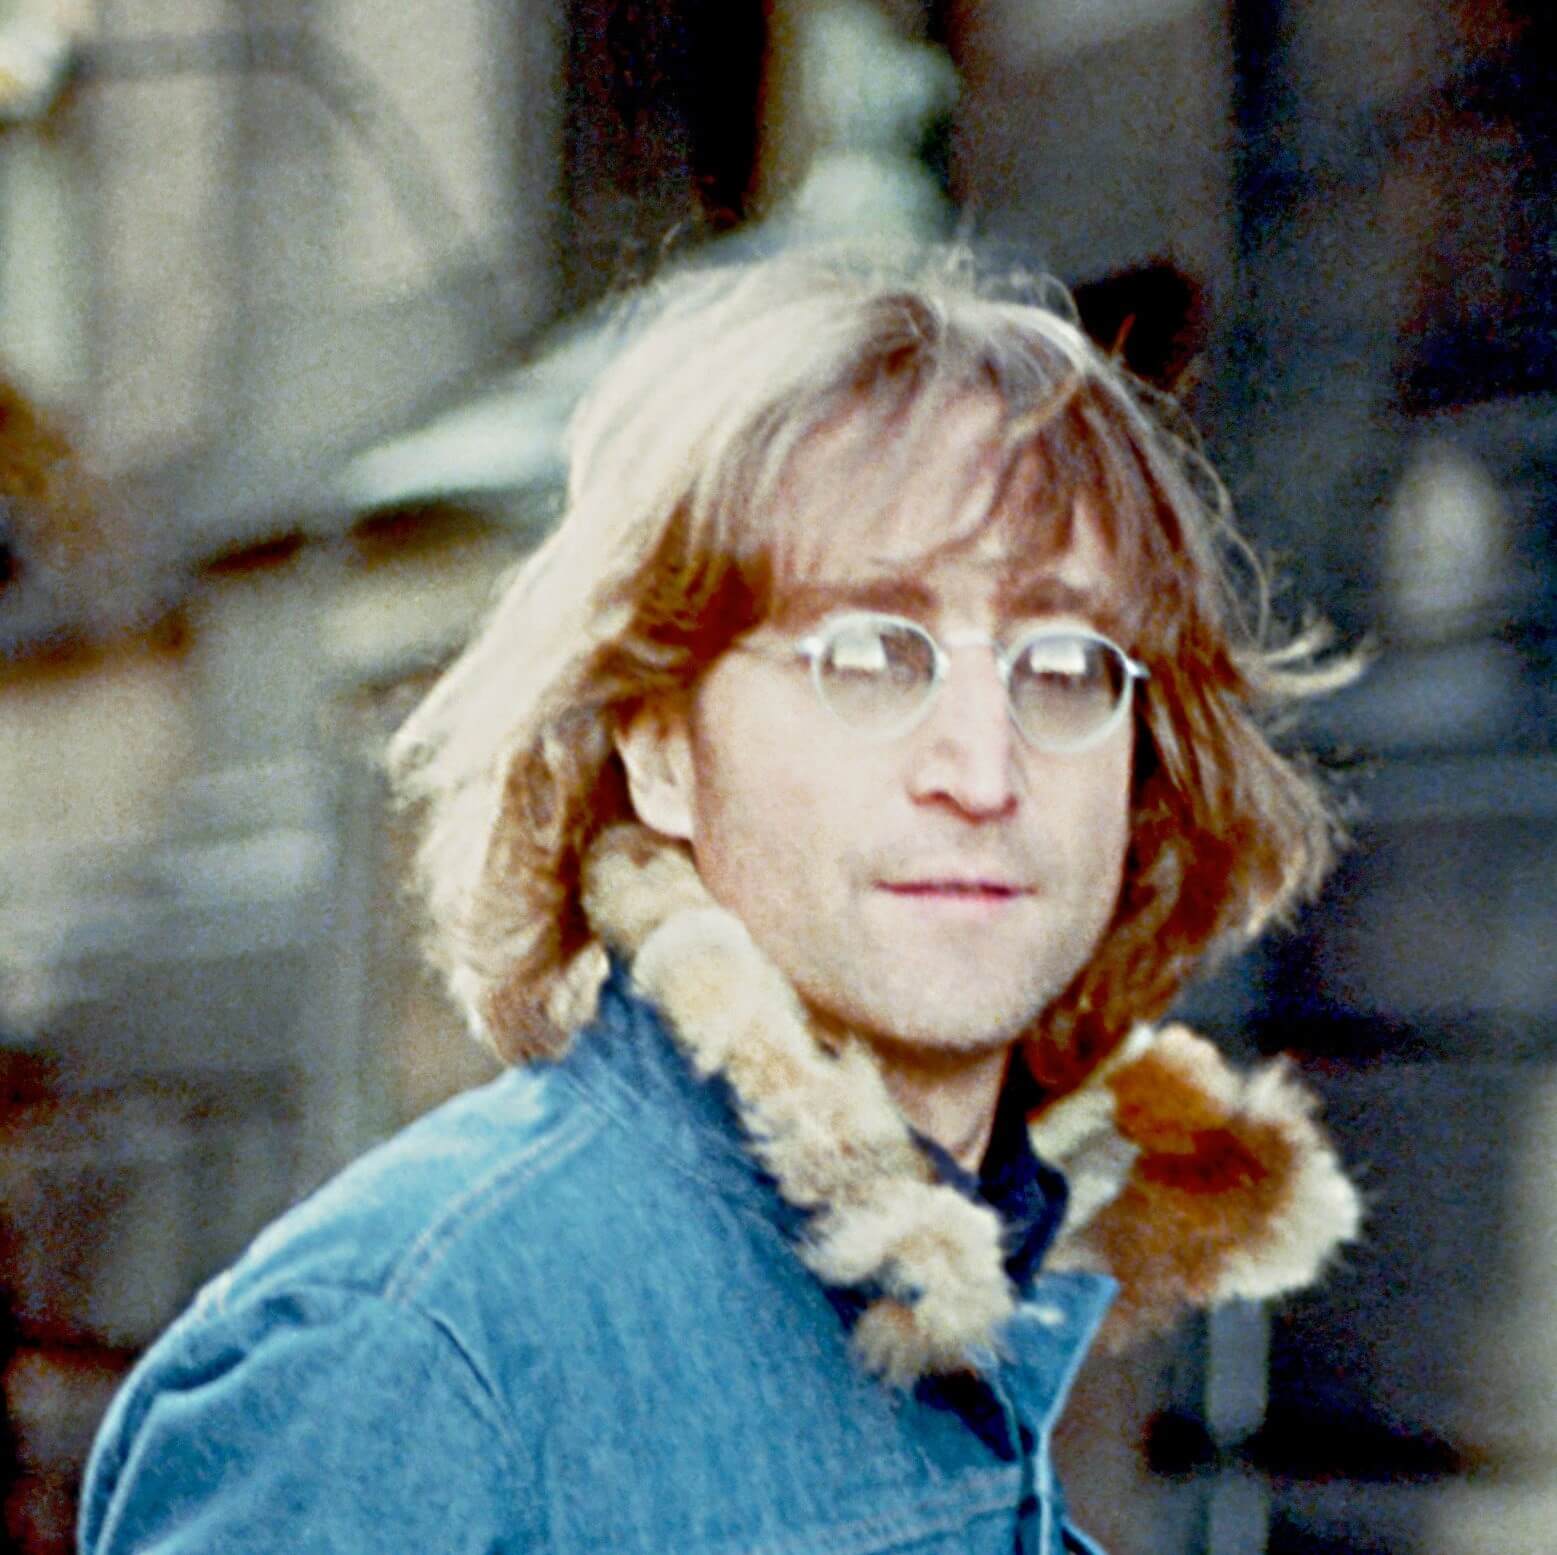 John Lennon wearing blue in New York City